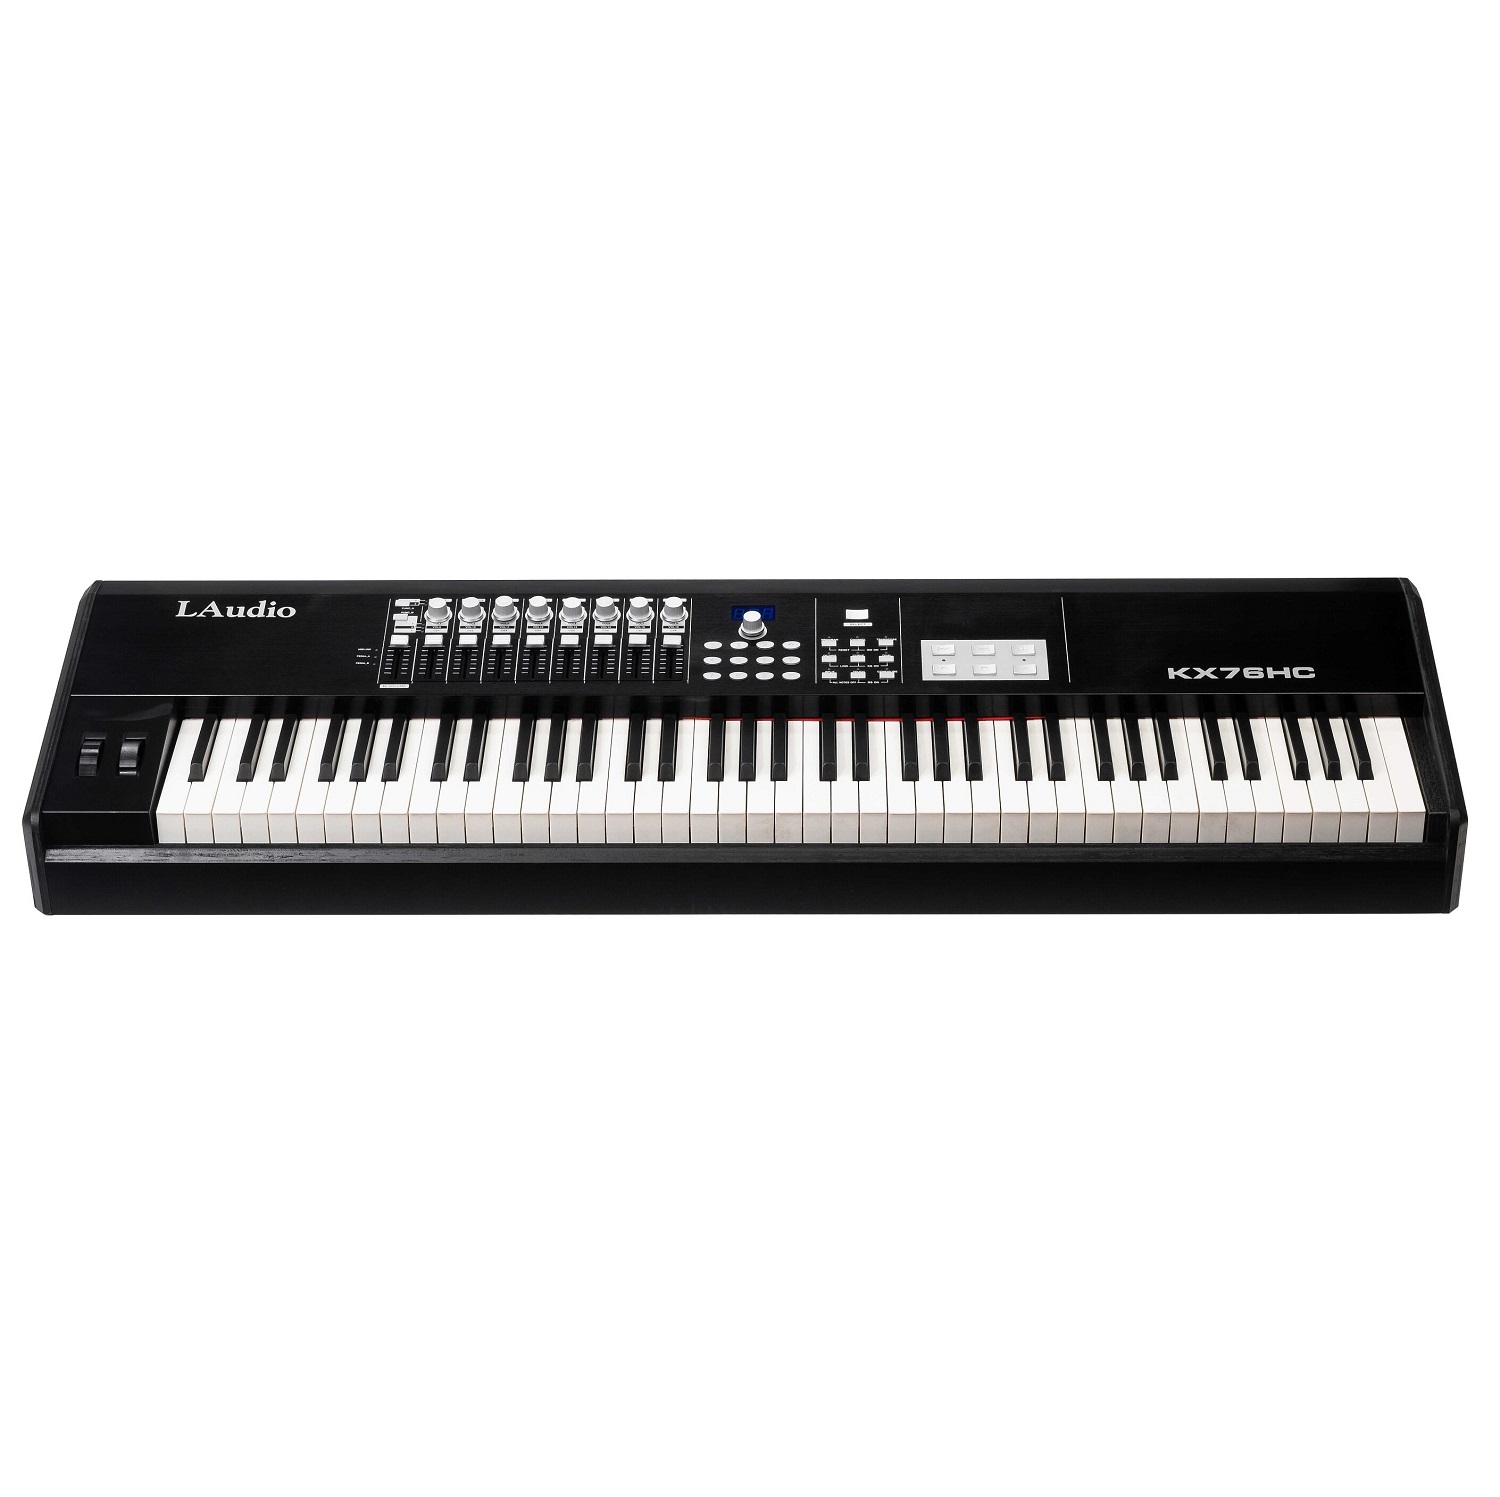 MIDI клавиатуры L Audio KX76HC midi клавиатуры midiplus tiny plus